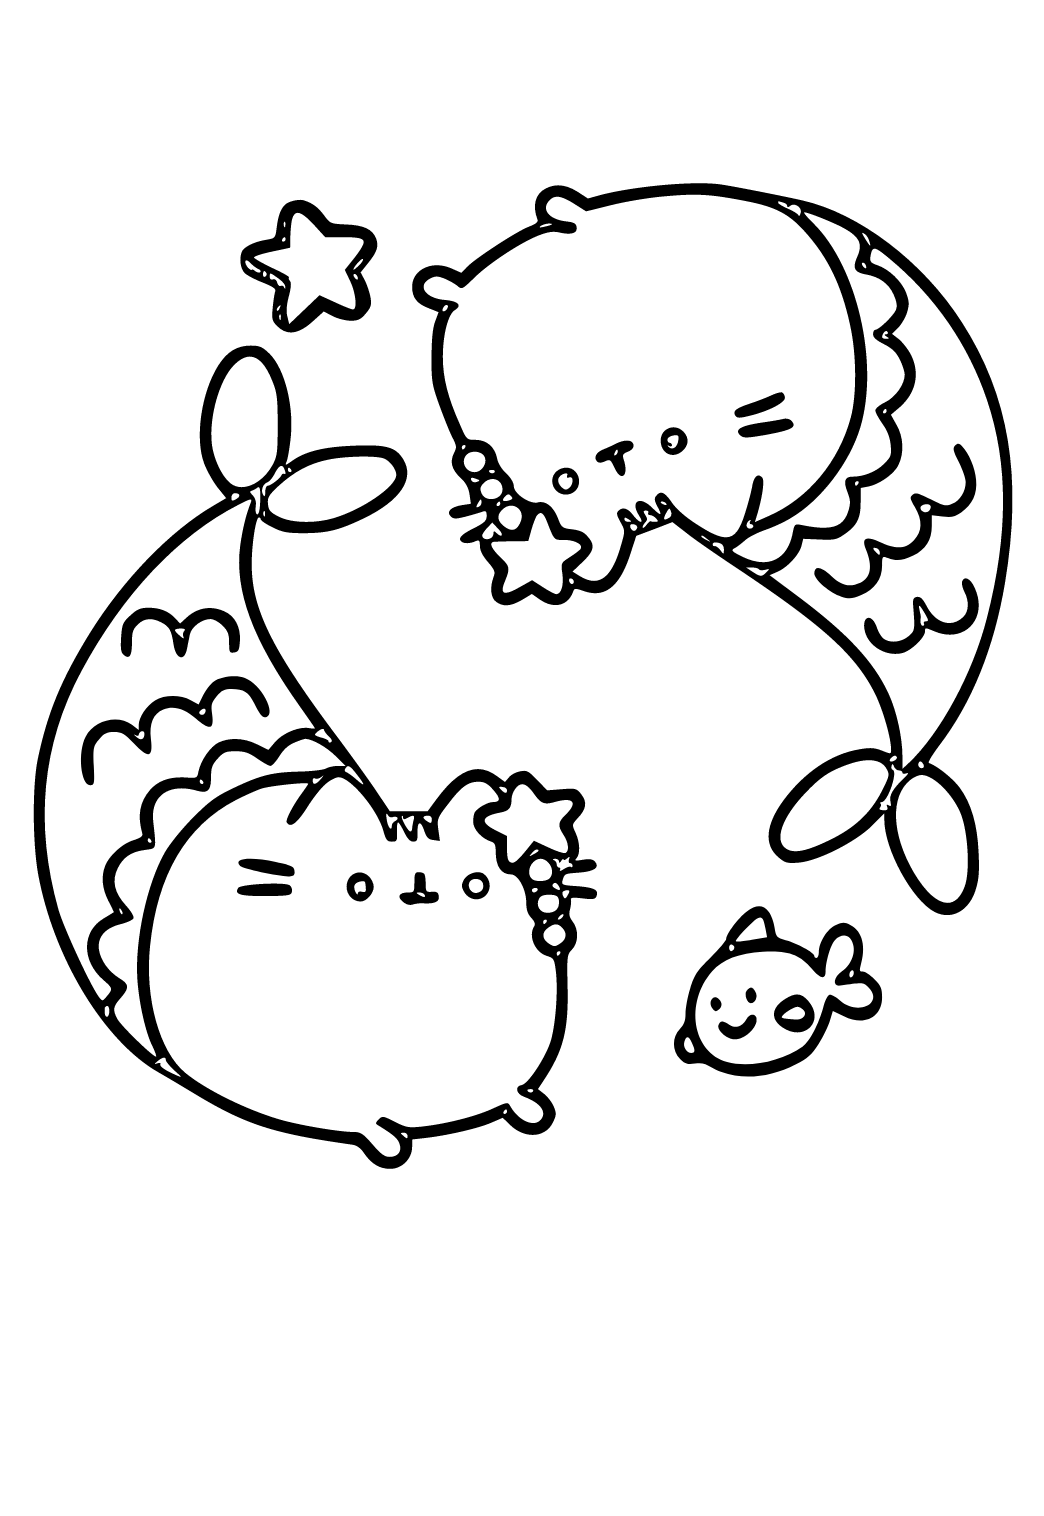 65 Desenhos para colorir kawaii e imprimir  Pusheen coloring pages, Cat  coloring page, Mermaid coloring pages